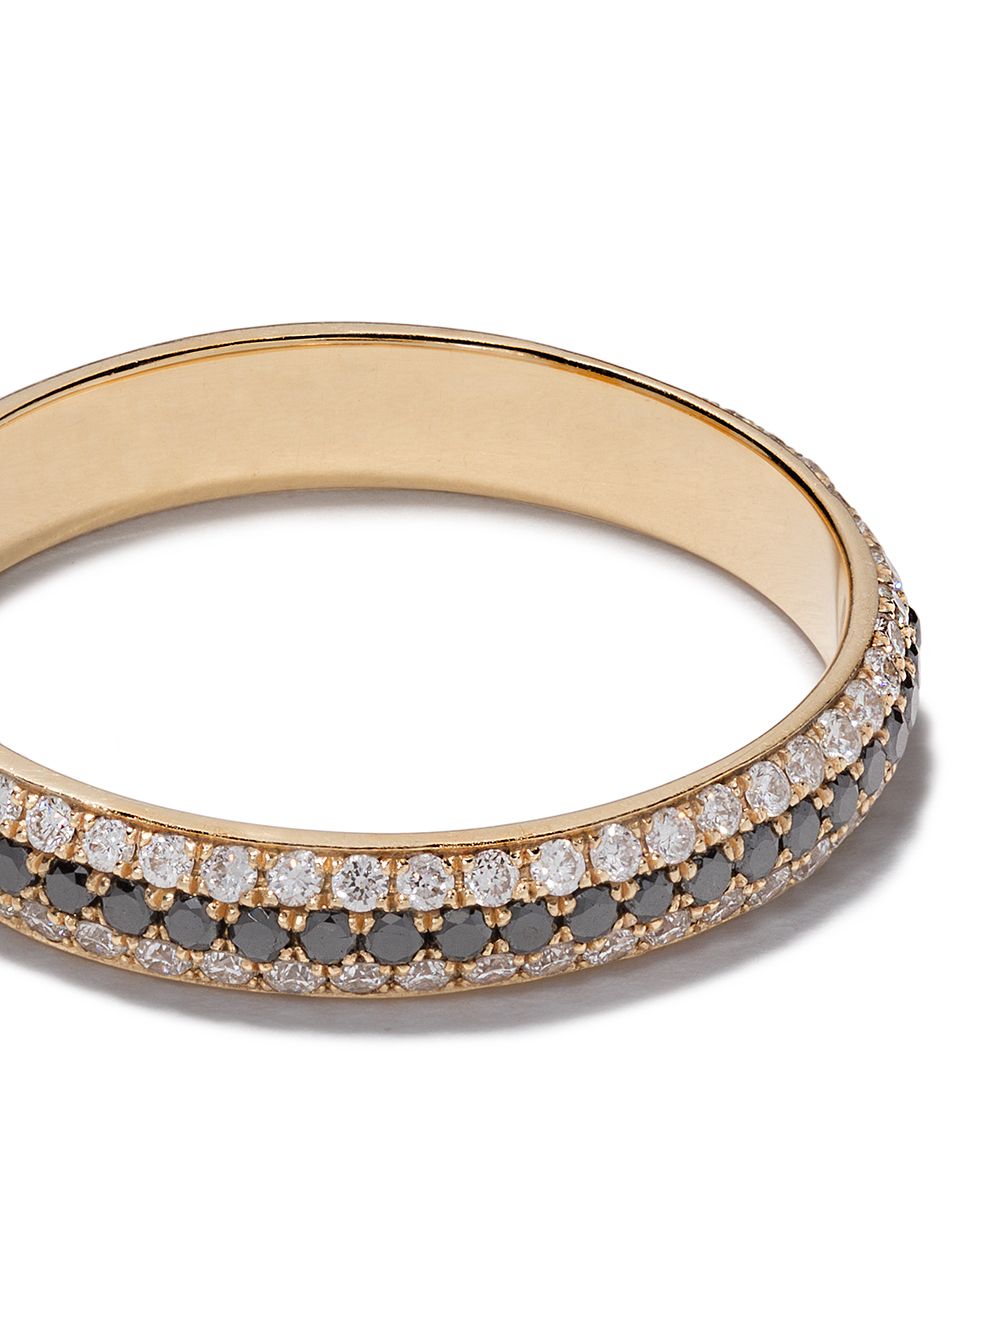 фото Lizzie mandler fine jewelry золотое кольцо с бриллиантами